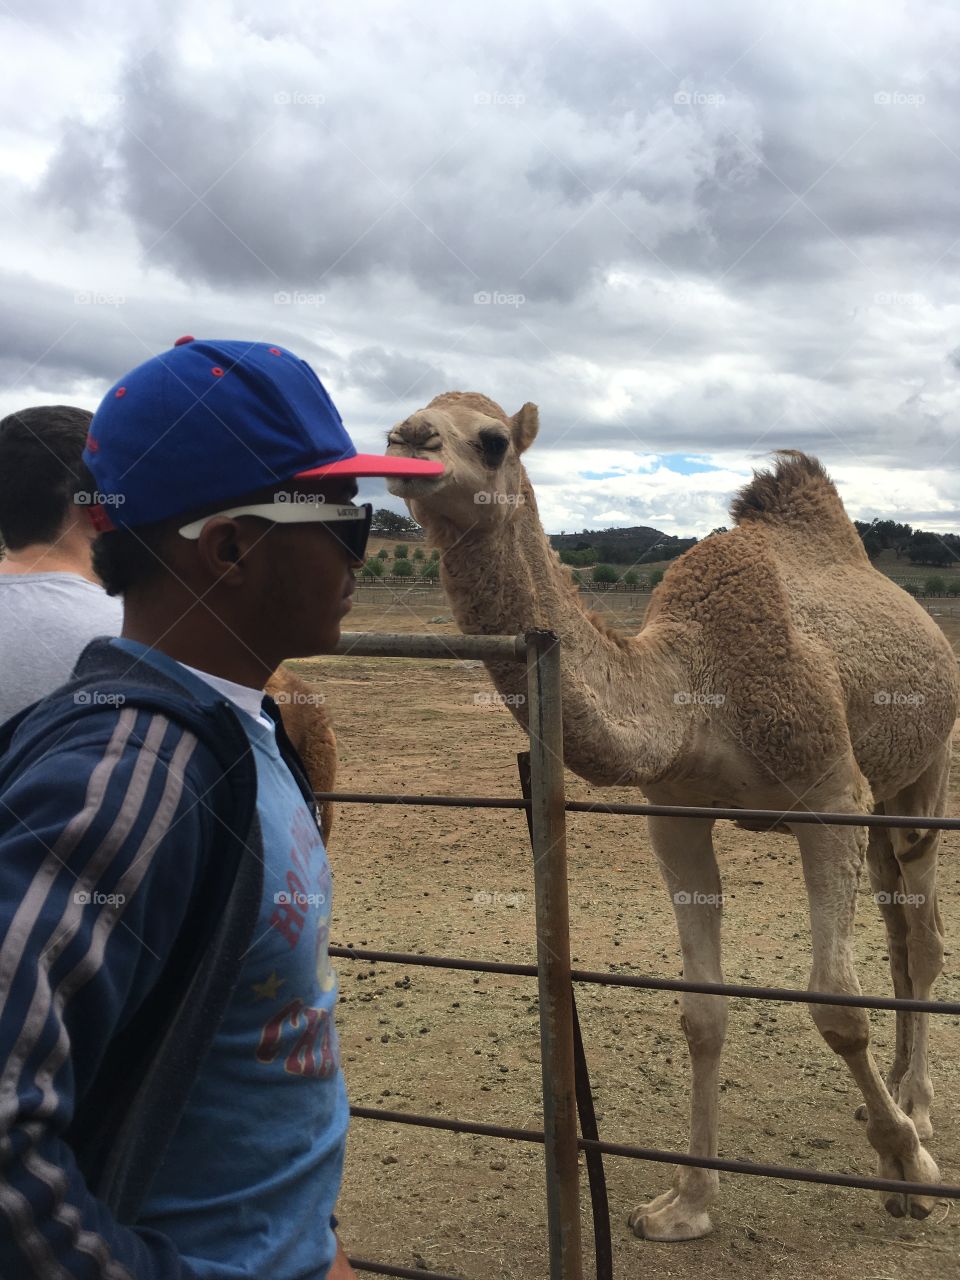 Camel, Mammal, People, Desert, Travel